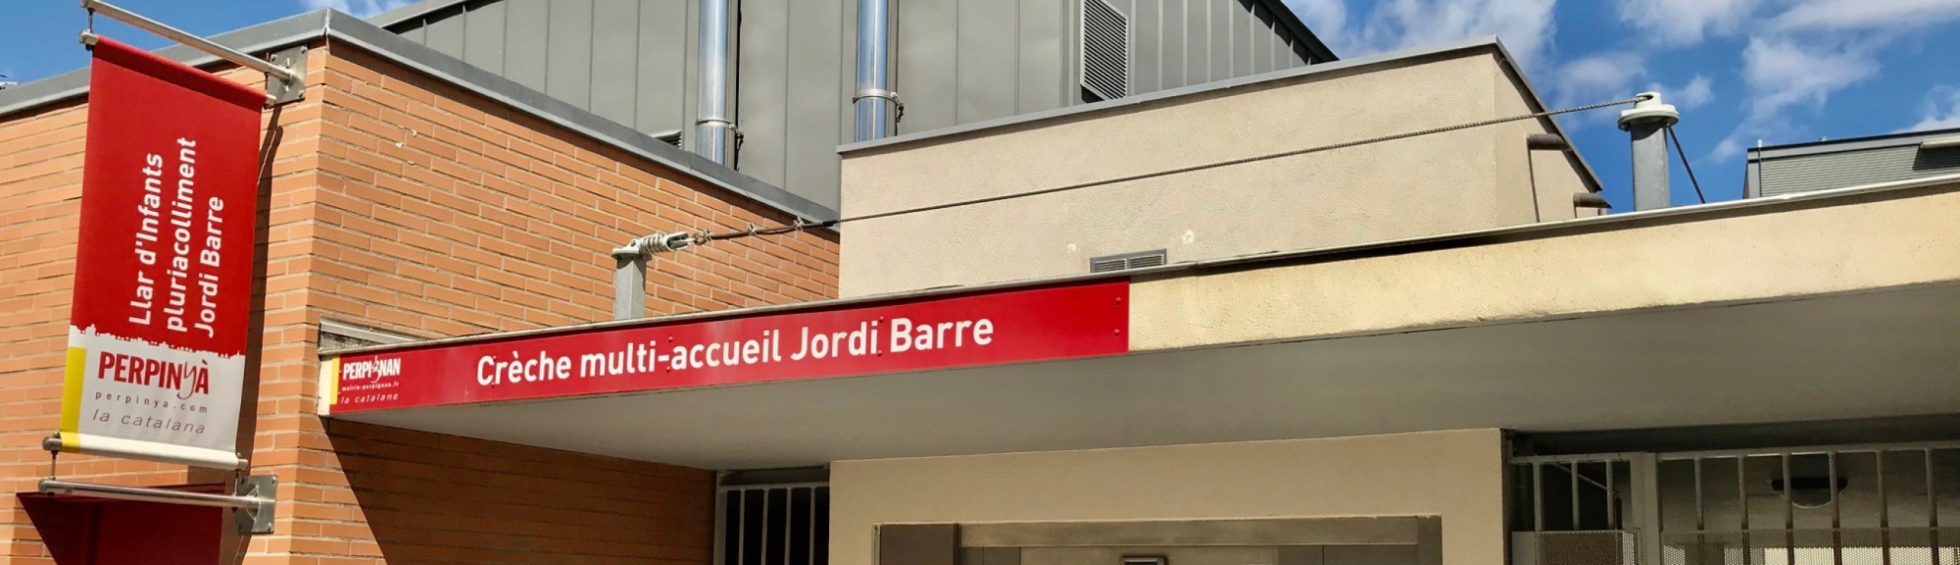 Crèche Jordi Barre